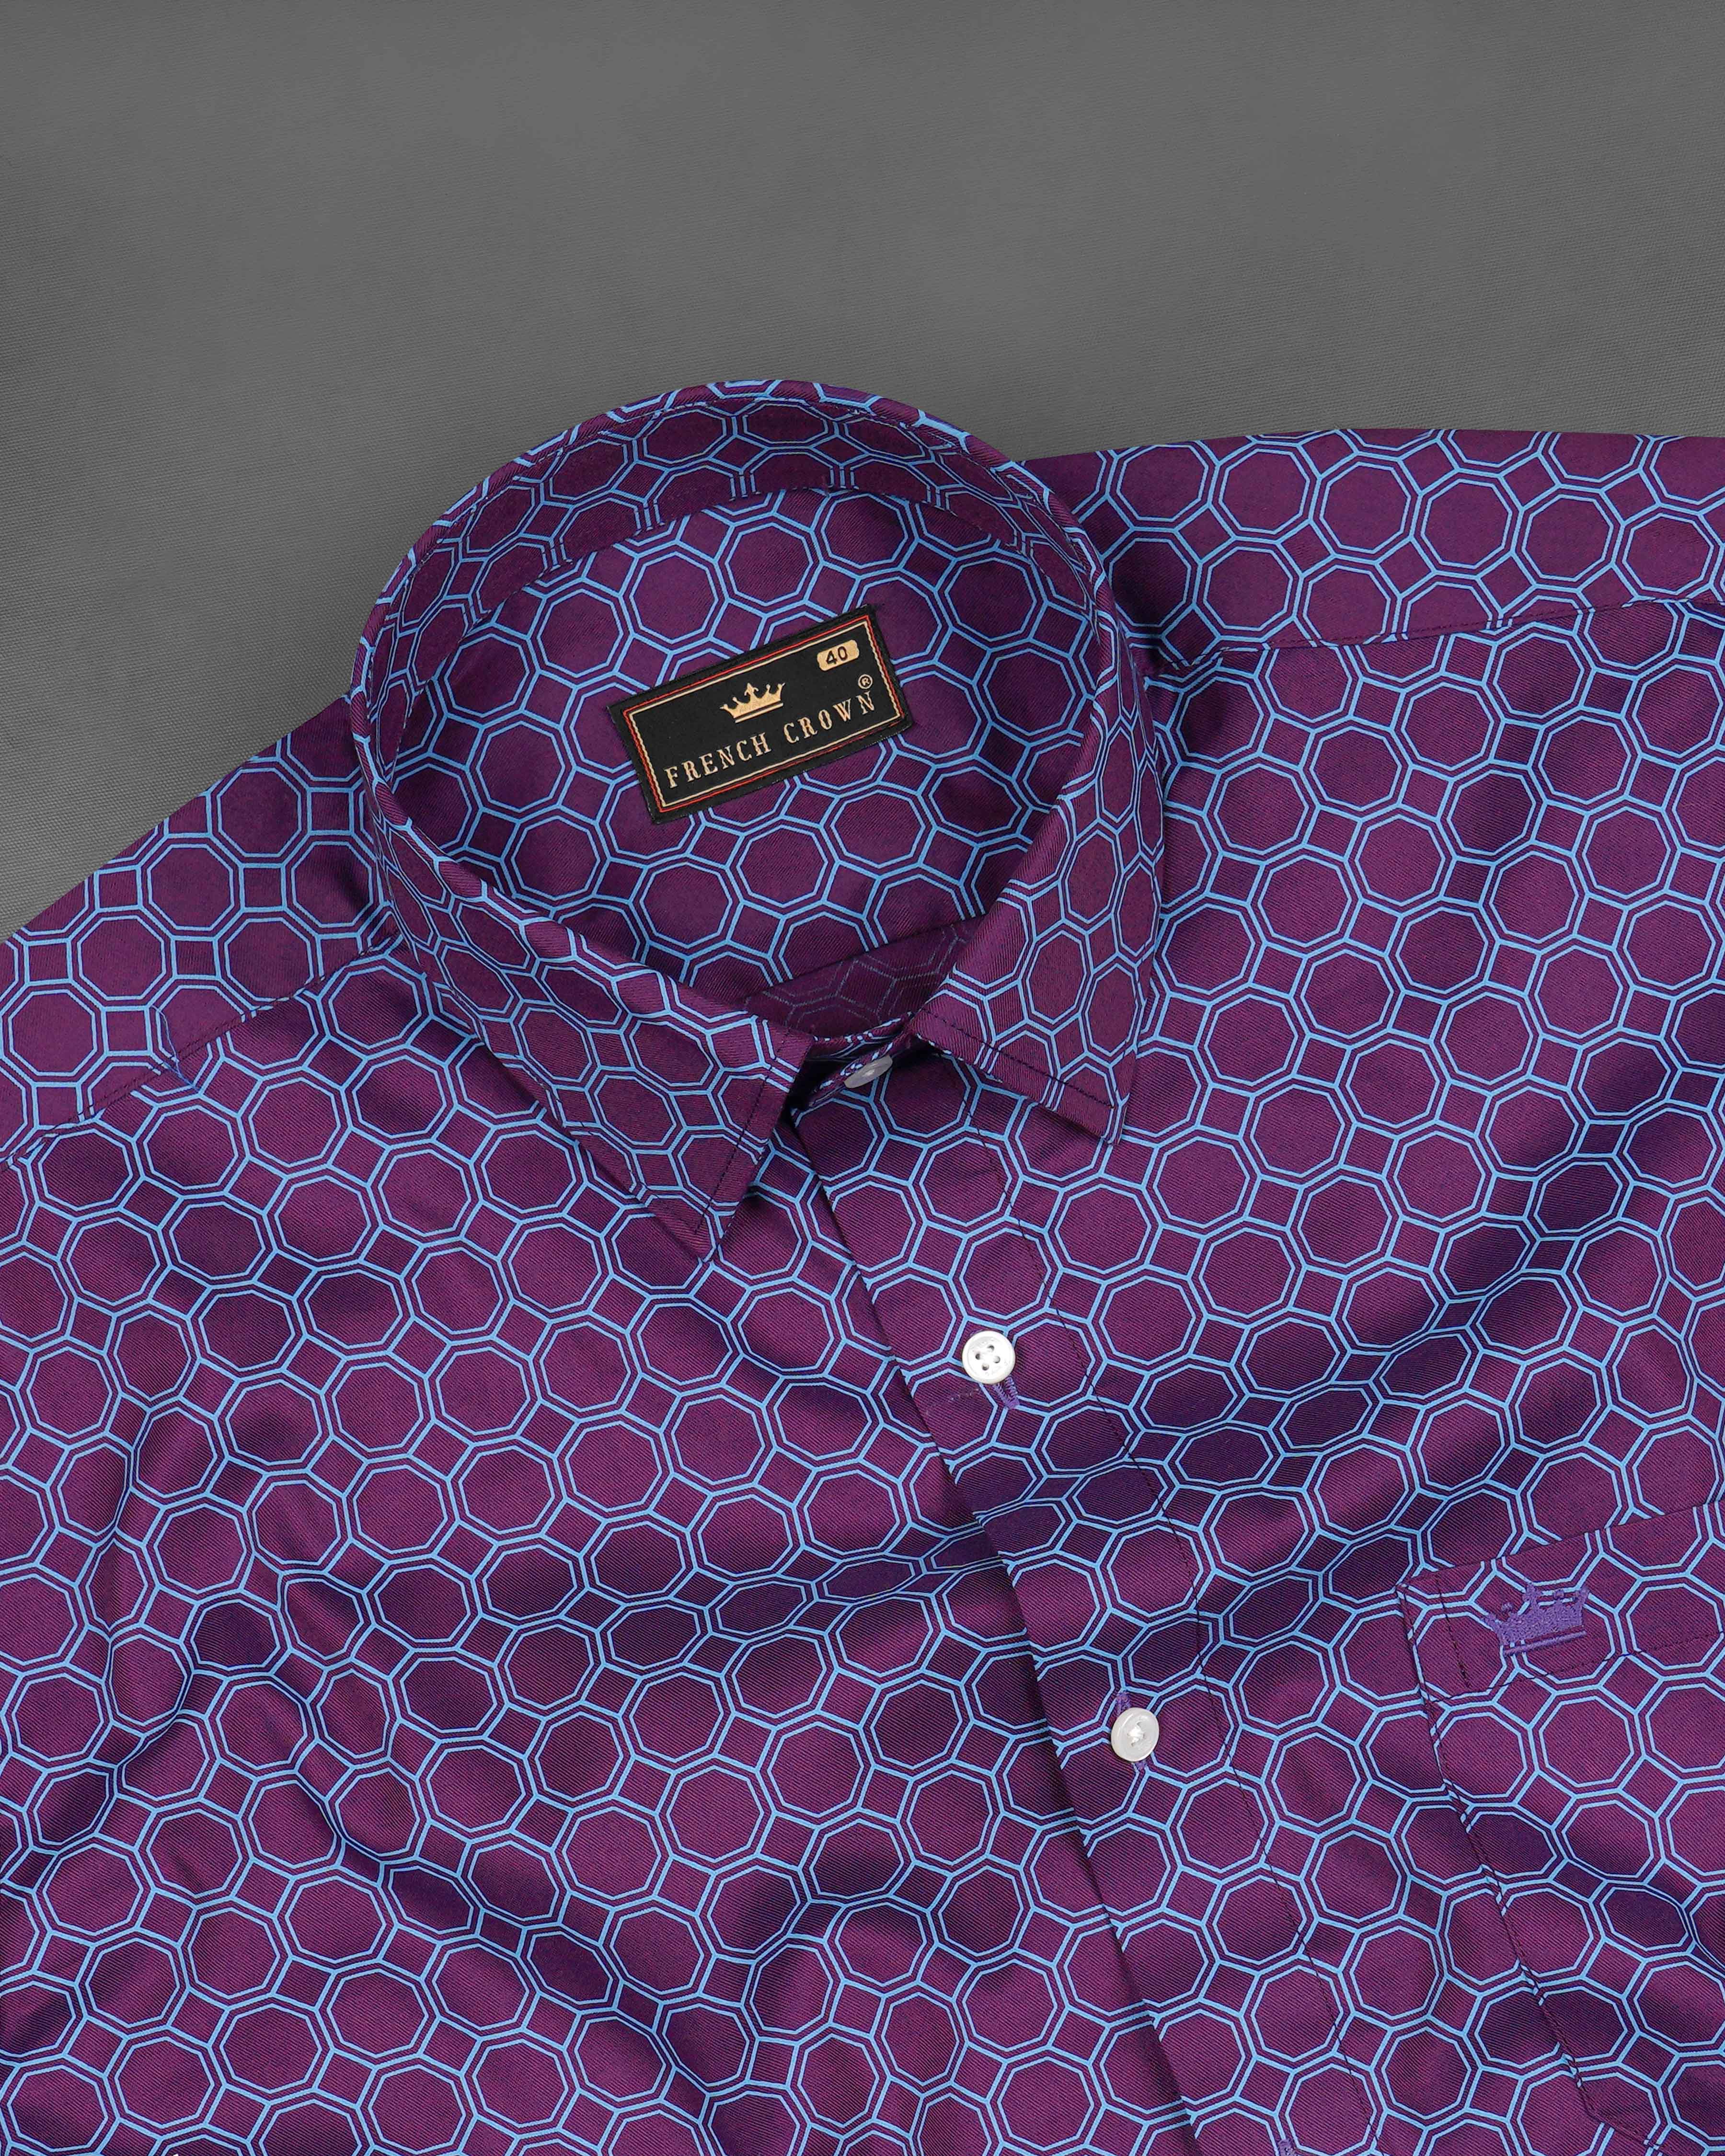 Bossanova Violet with Shakespeare Blue Hexagonal Printed Twill Premium Cotton Shirt 8115-38, 8115-H-38, 8115-39, 8115-H-39, 8115-40, 8115-H-40, 8115-42, 8115-H-42, 8115-44, 8115-H-44, 8115-46, 8115-H-46, 8115-48, 8115-H-48, 8115-50, 8115-H-50, 8115-52, 8115-H-52 